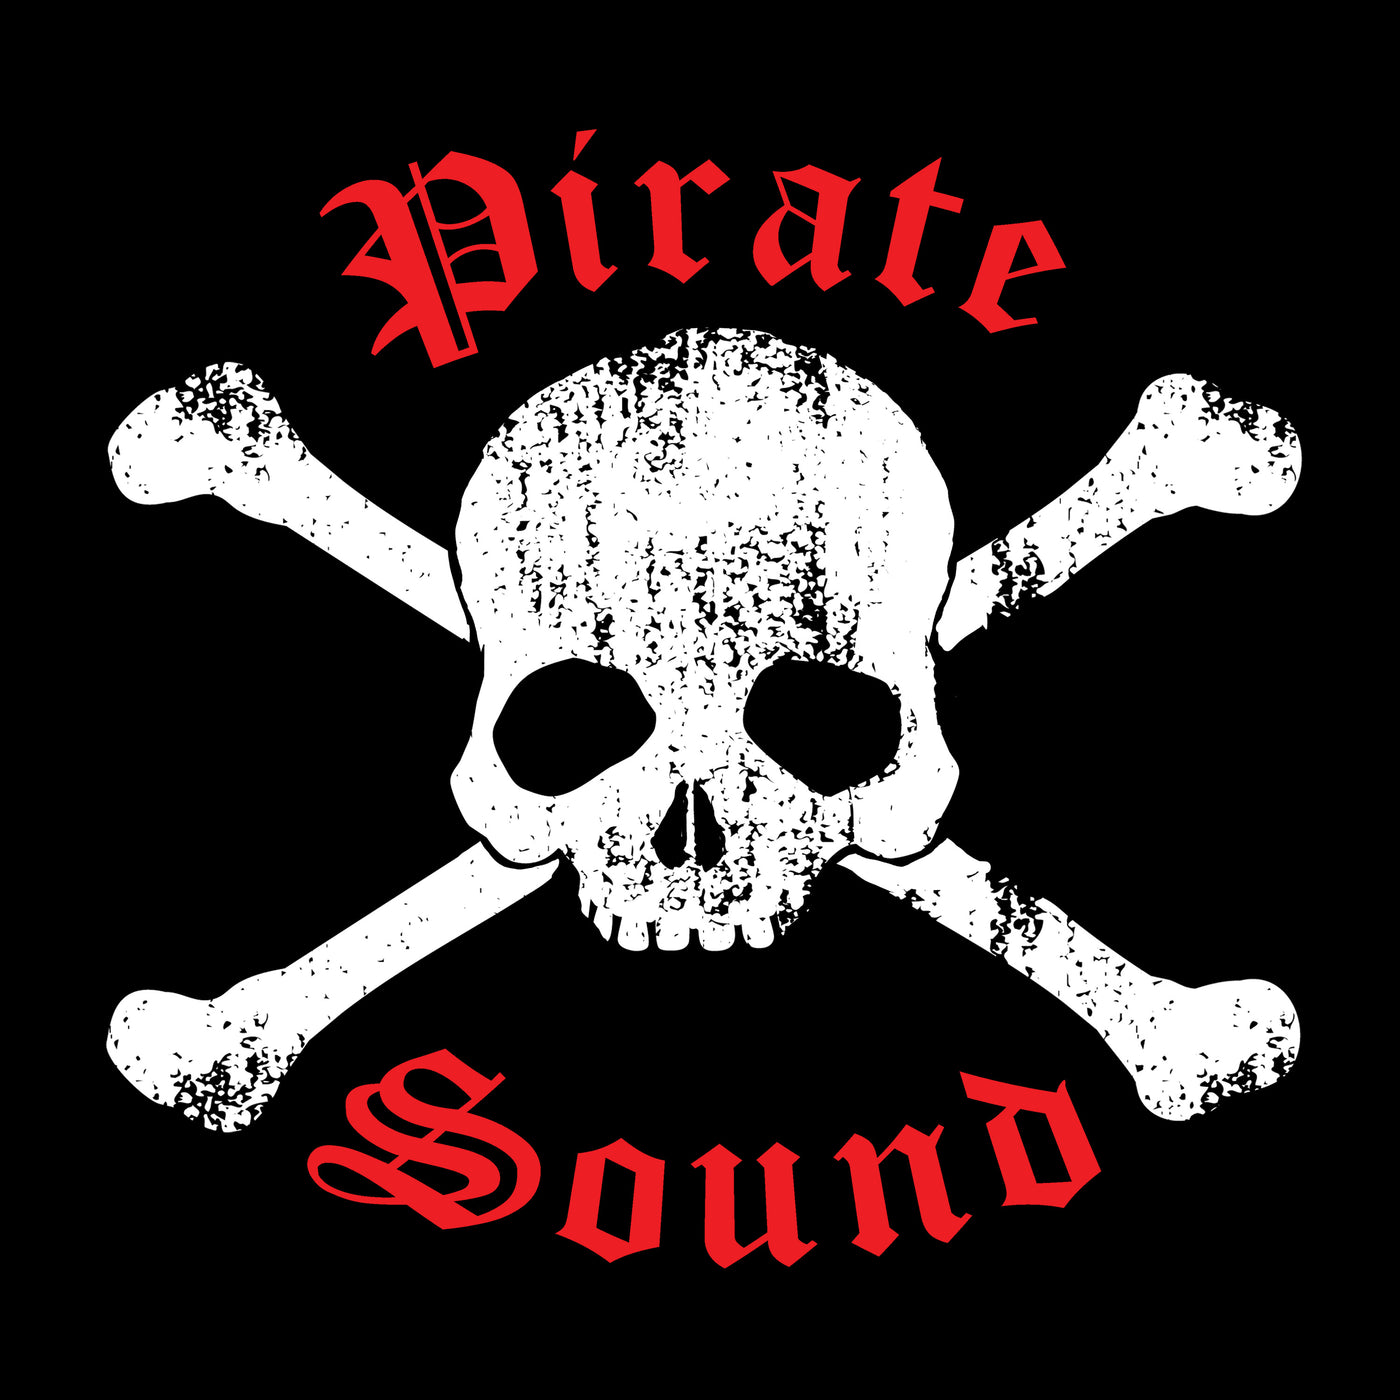 Pirate Sound